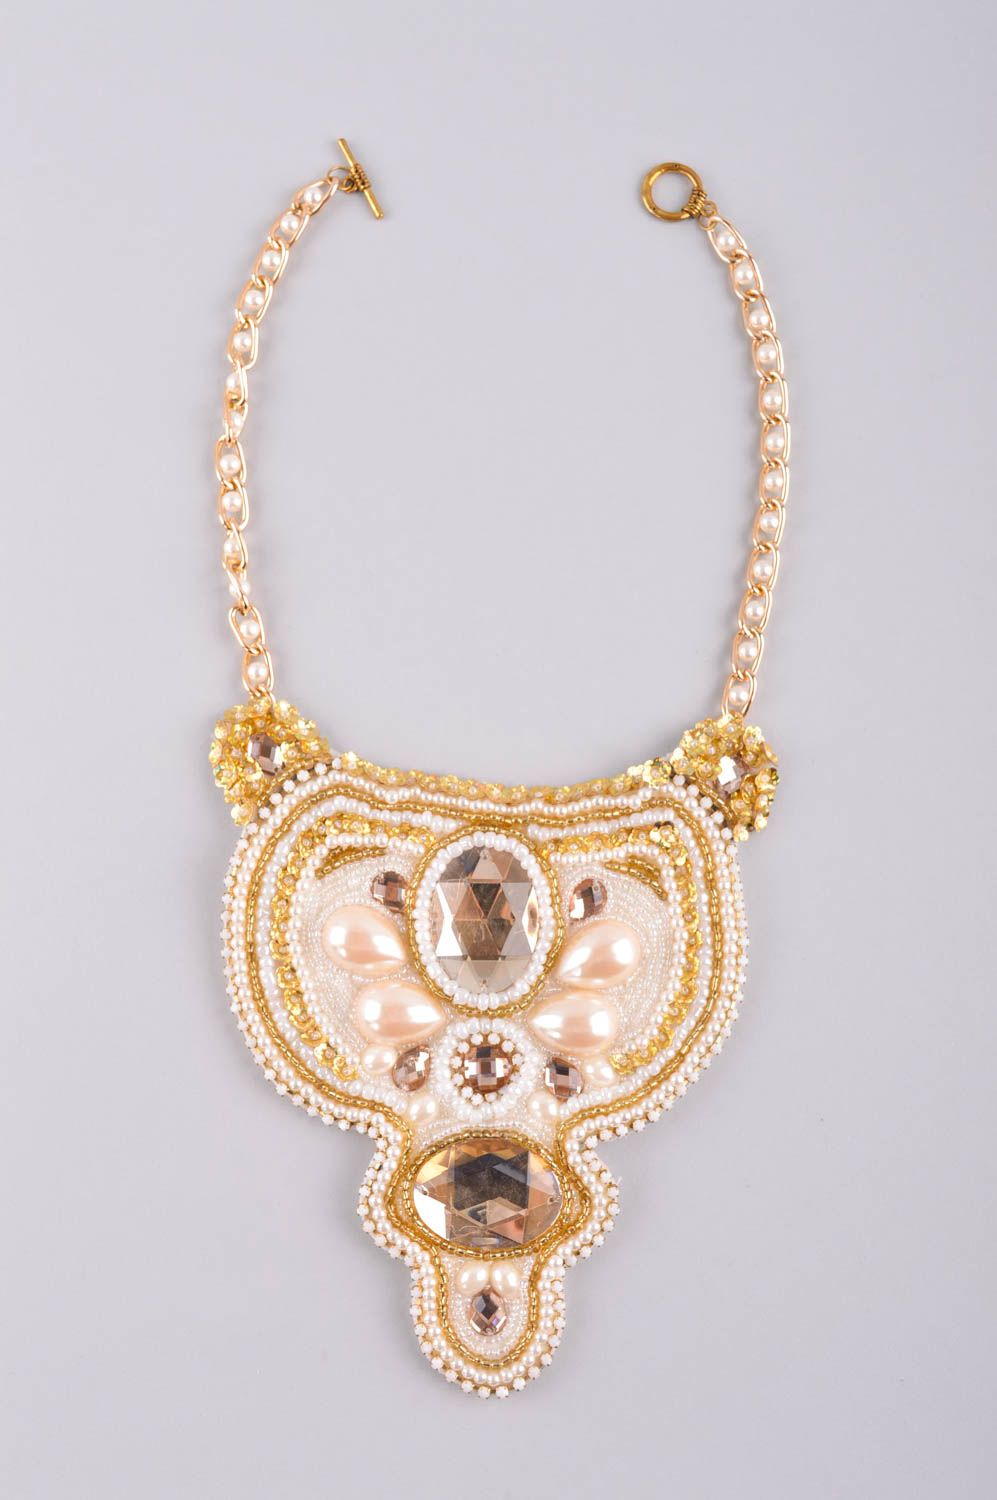 Handmade necklace designer accessory unusual gift beautiful beads jewelry photo 5